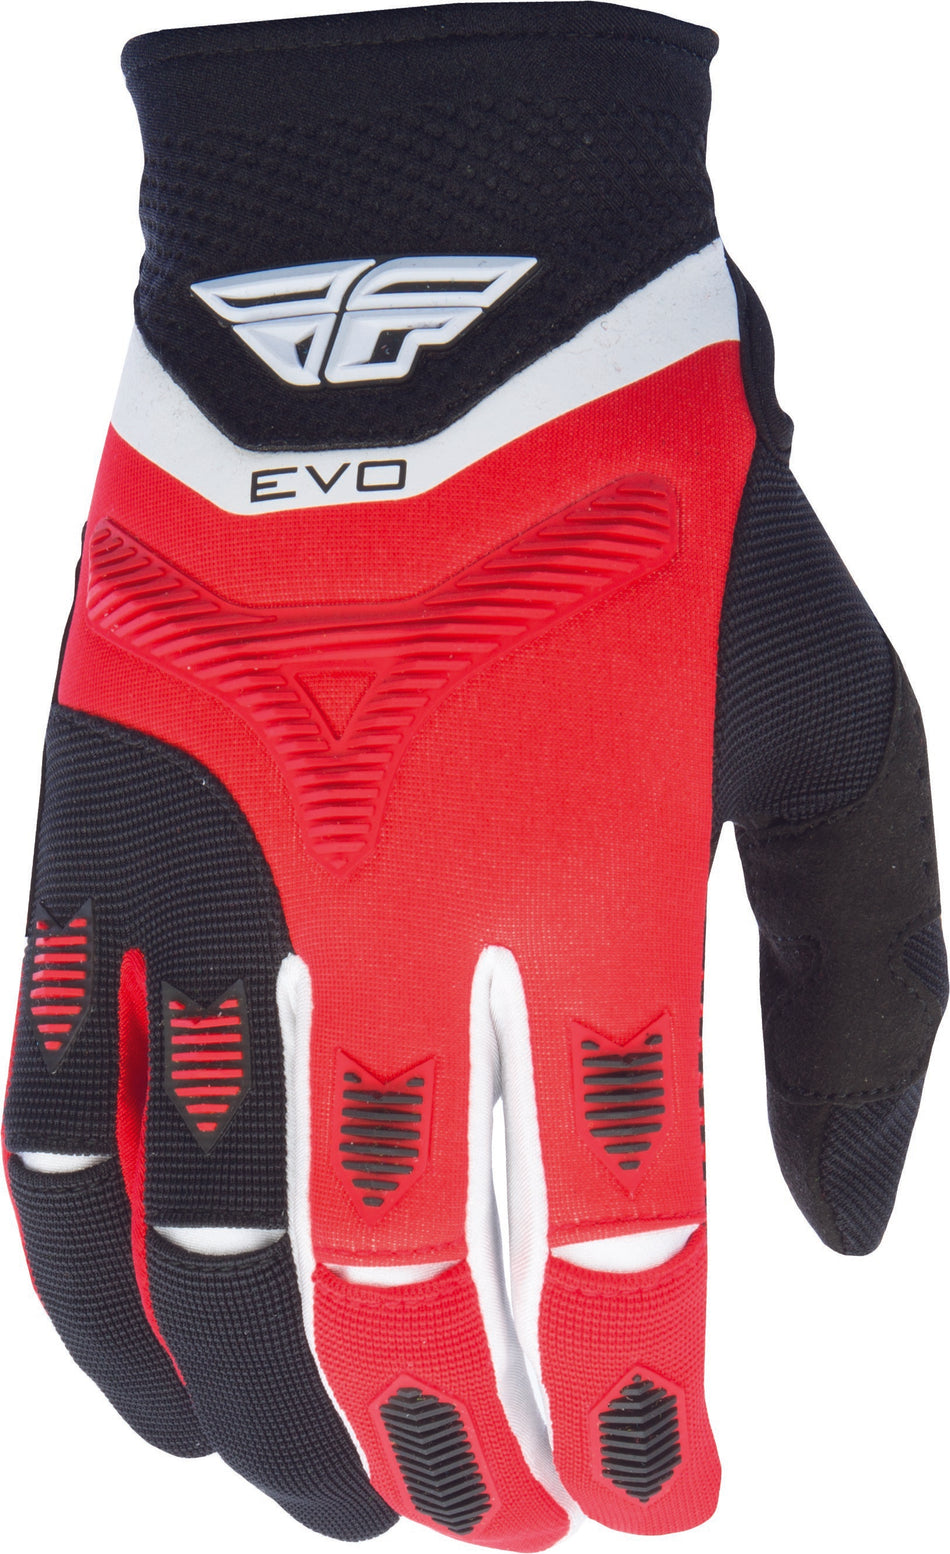 FLY RACING Evo Glove Red/Black Yl 370-11206